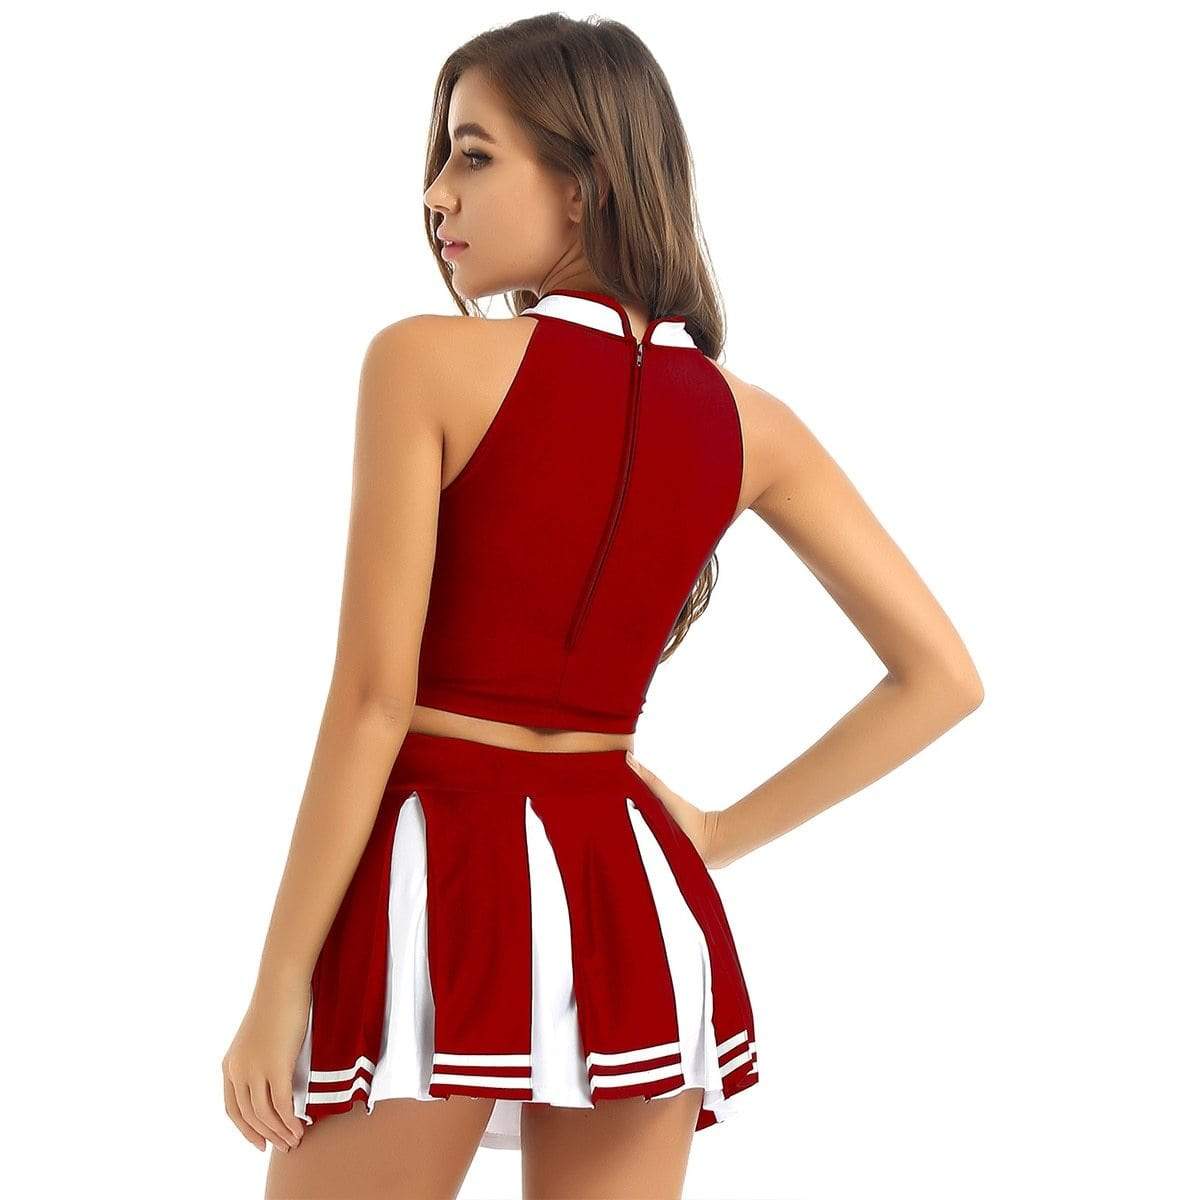 Kinky Cloth 200003986 Cheerleader Costume Uniform